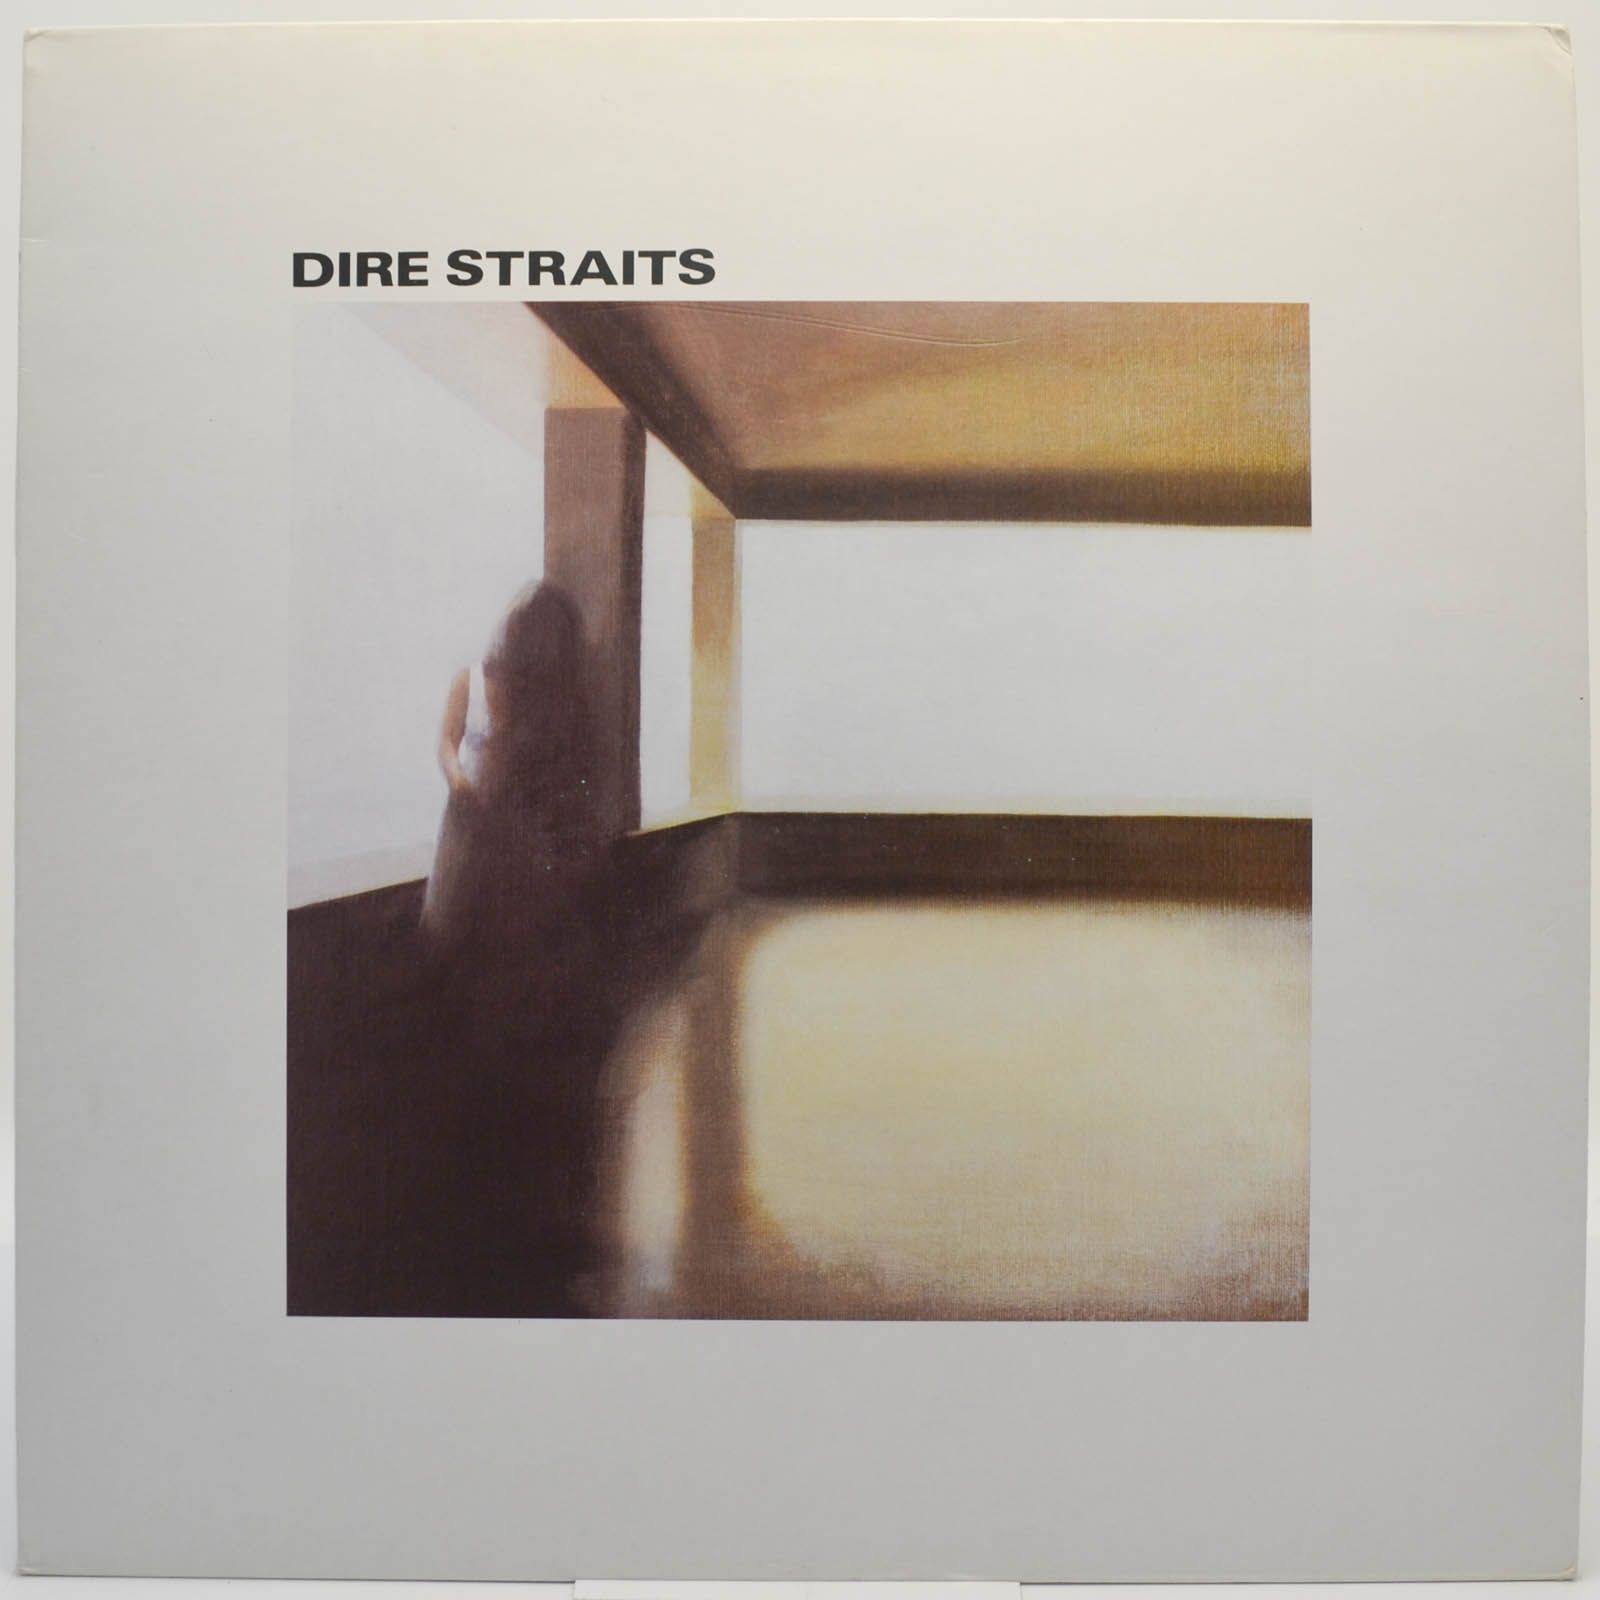 Dire Straits — Dire Straits (1-st, UK), 1978